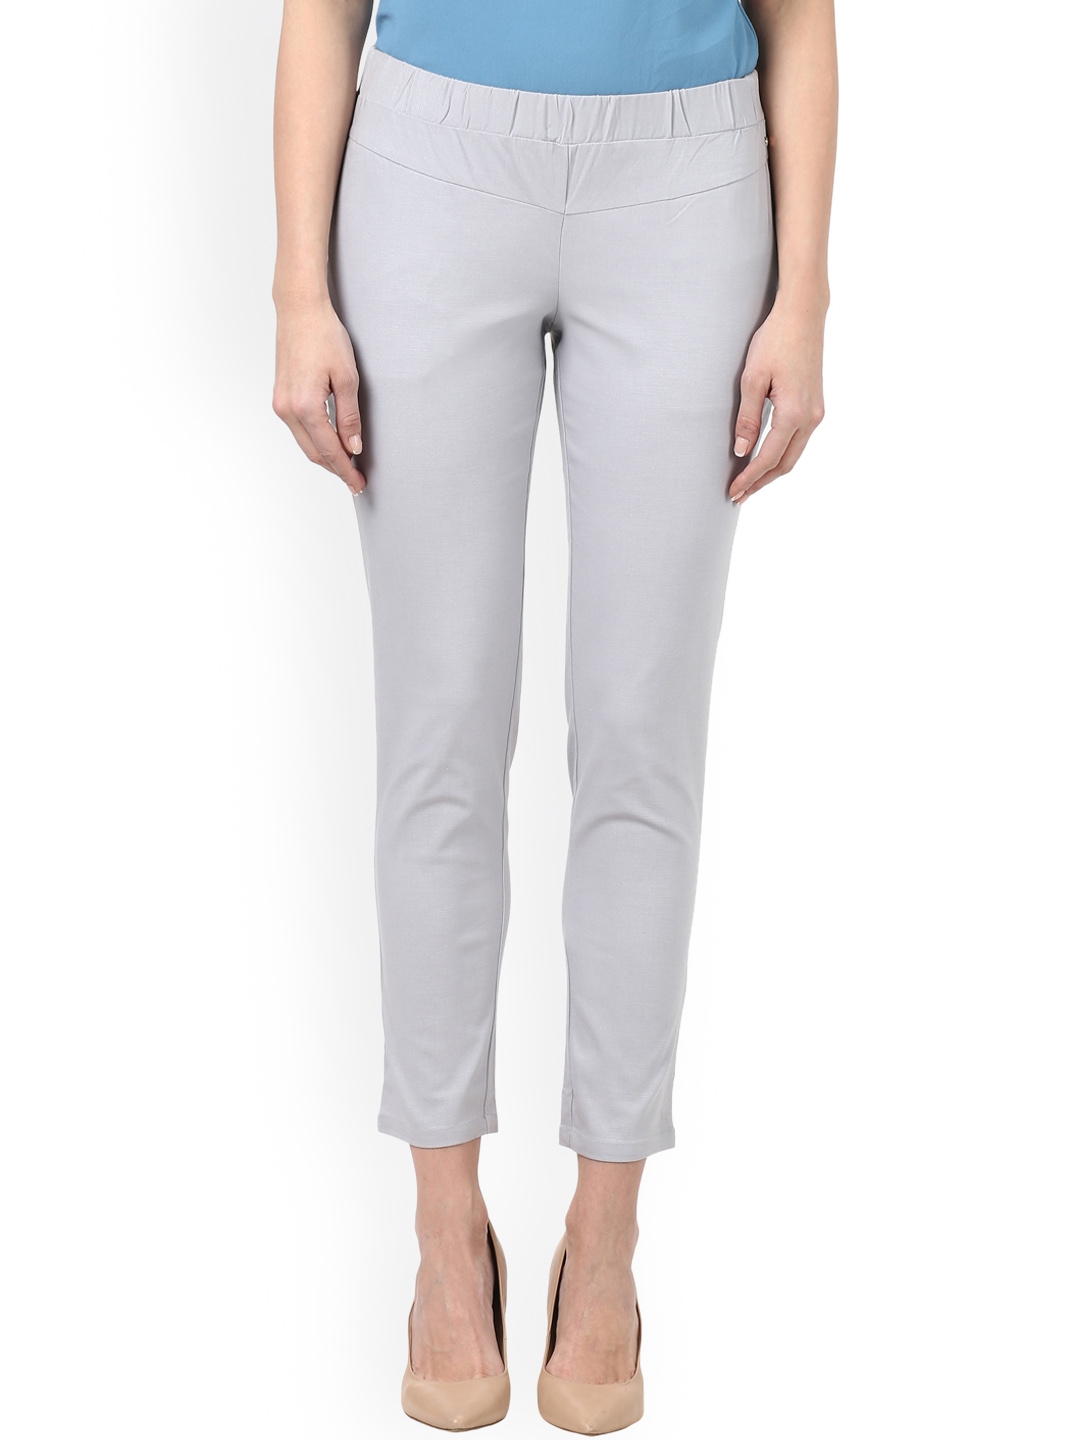 Buy INVICTUS Men Grey Slim Fit Self Design Cigarette Trousers  Trousers  for Men 2029959  Myntra